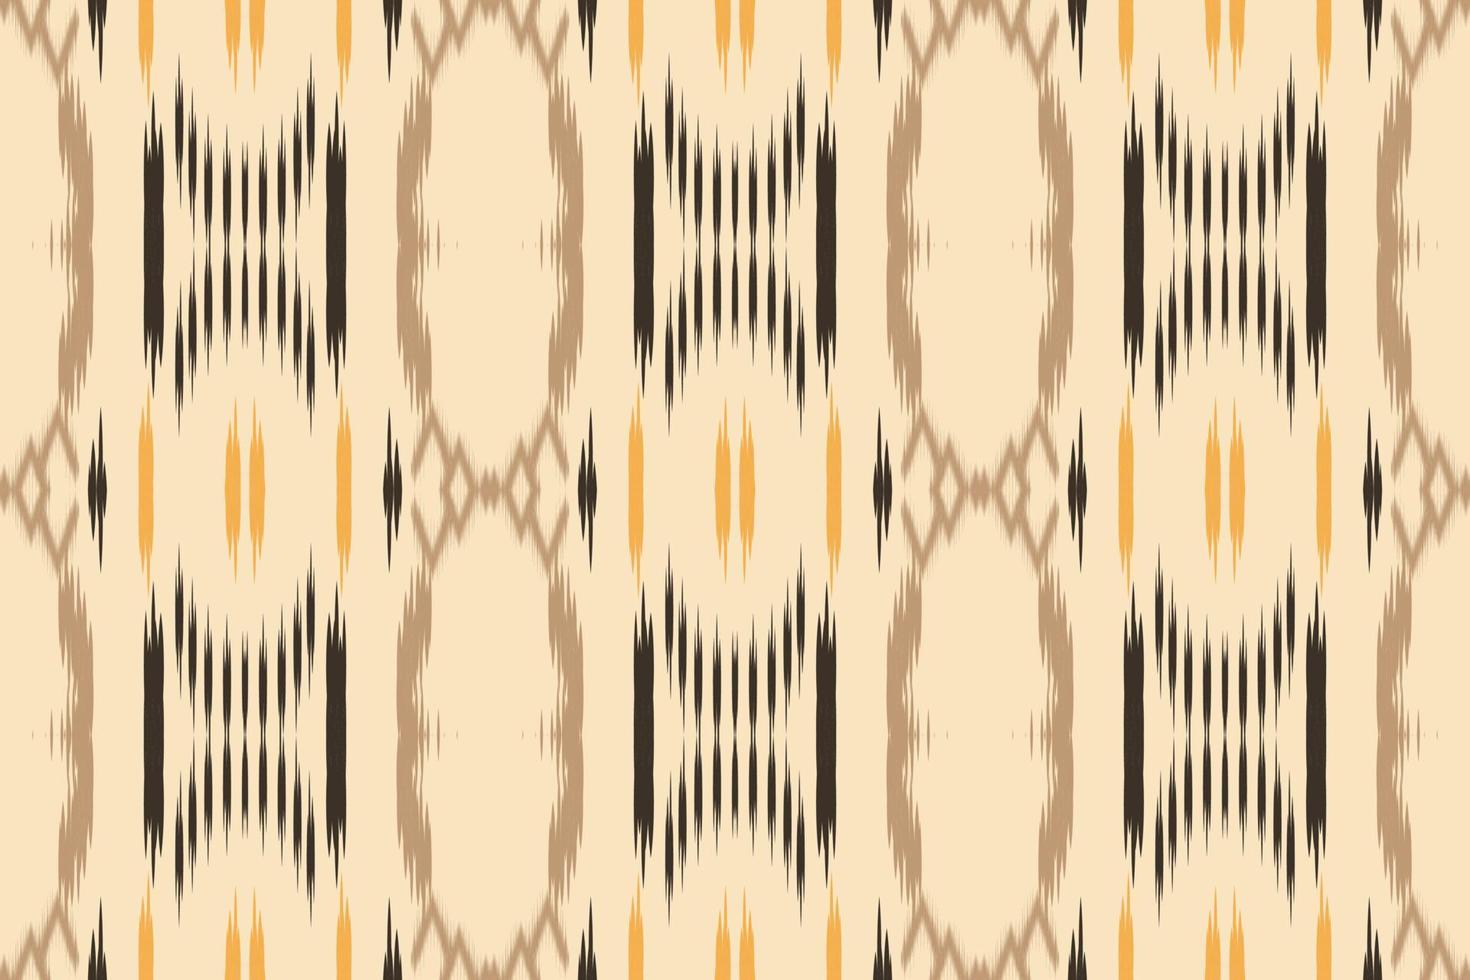 ikat puntos tribal azteca de patrones sin fisuras. étnico geométrico ikkat batik vector digital diseño textil para estampados tela sari mughal cepillo símbolo franjas textura kurti kurtis kurtas